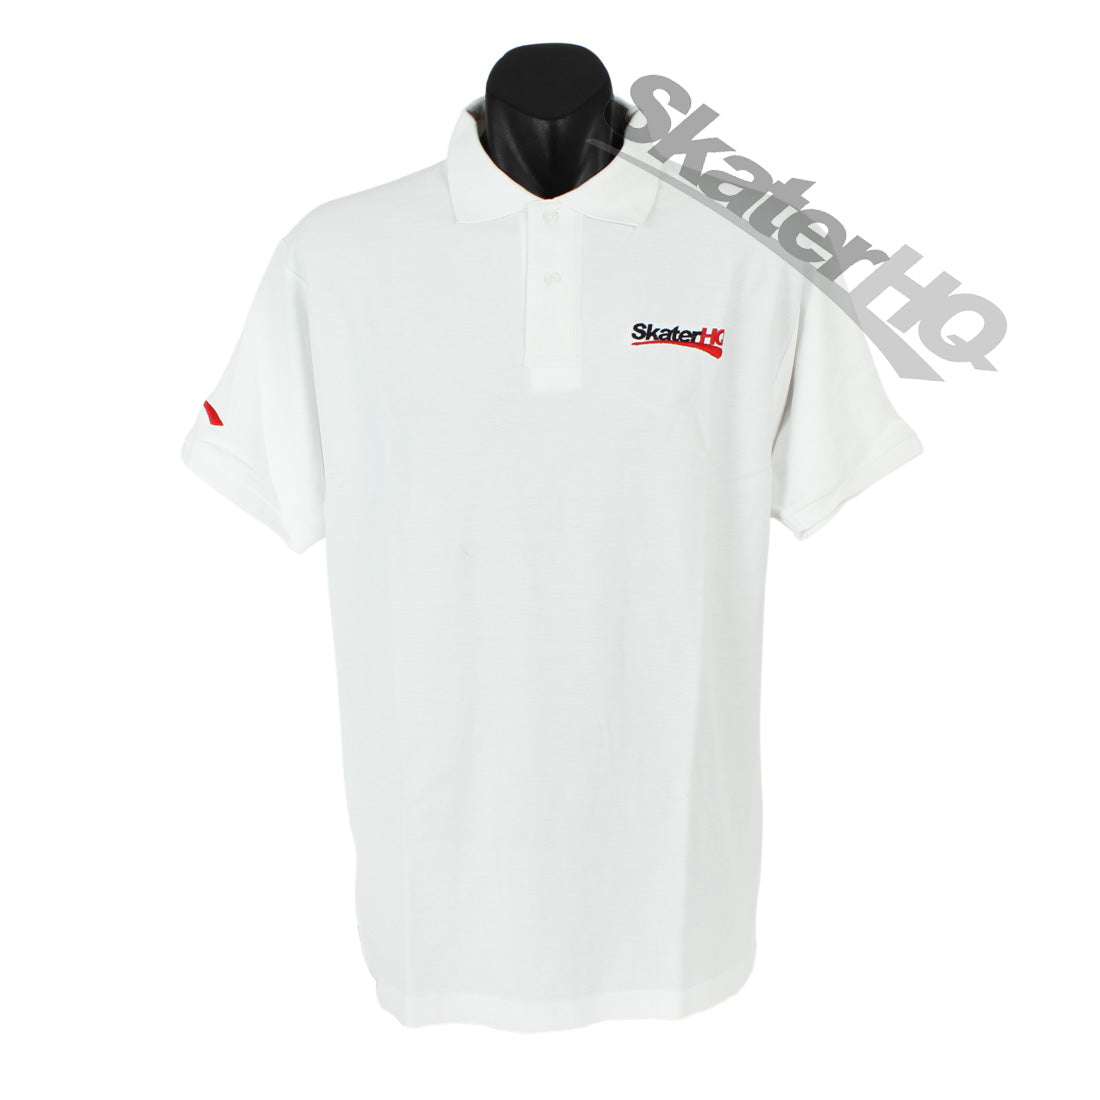 Skater HQ Adult Swoosh Polo Shirt - White Apparel Skater HQ Clothing